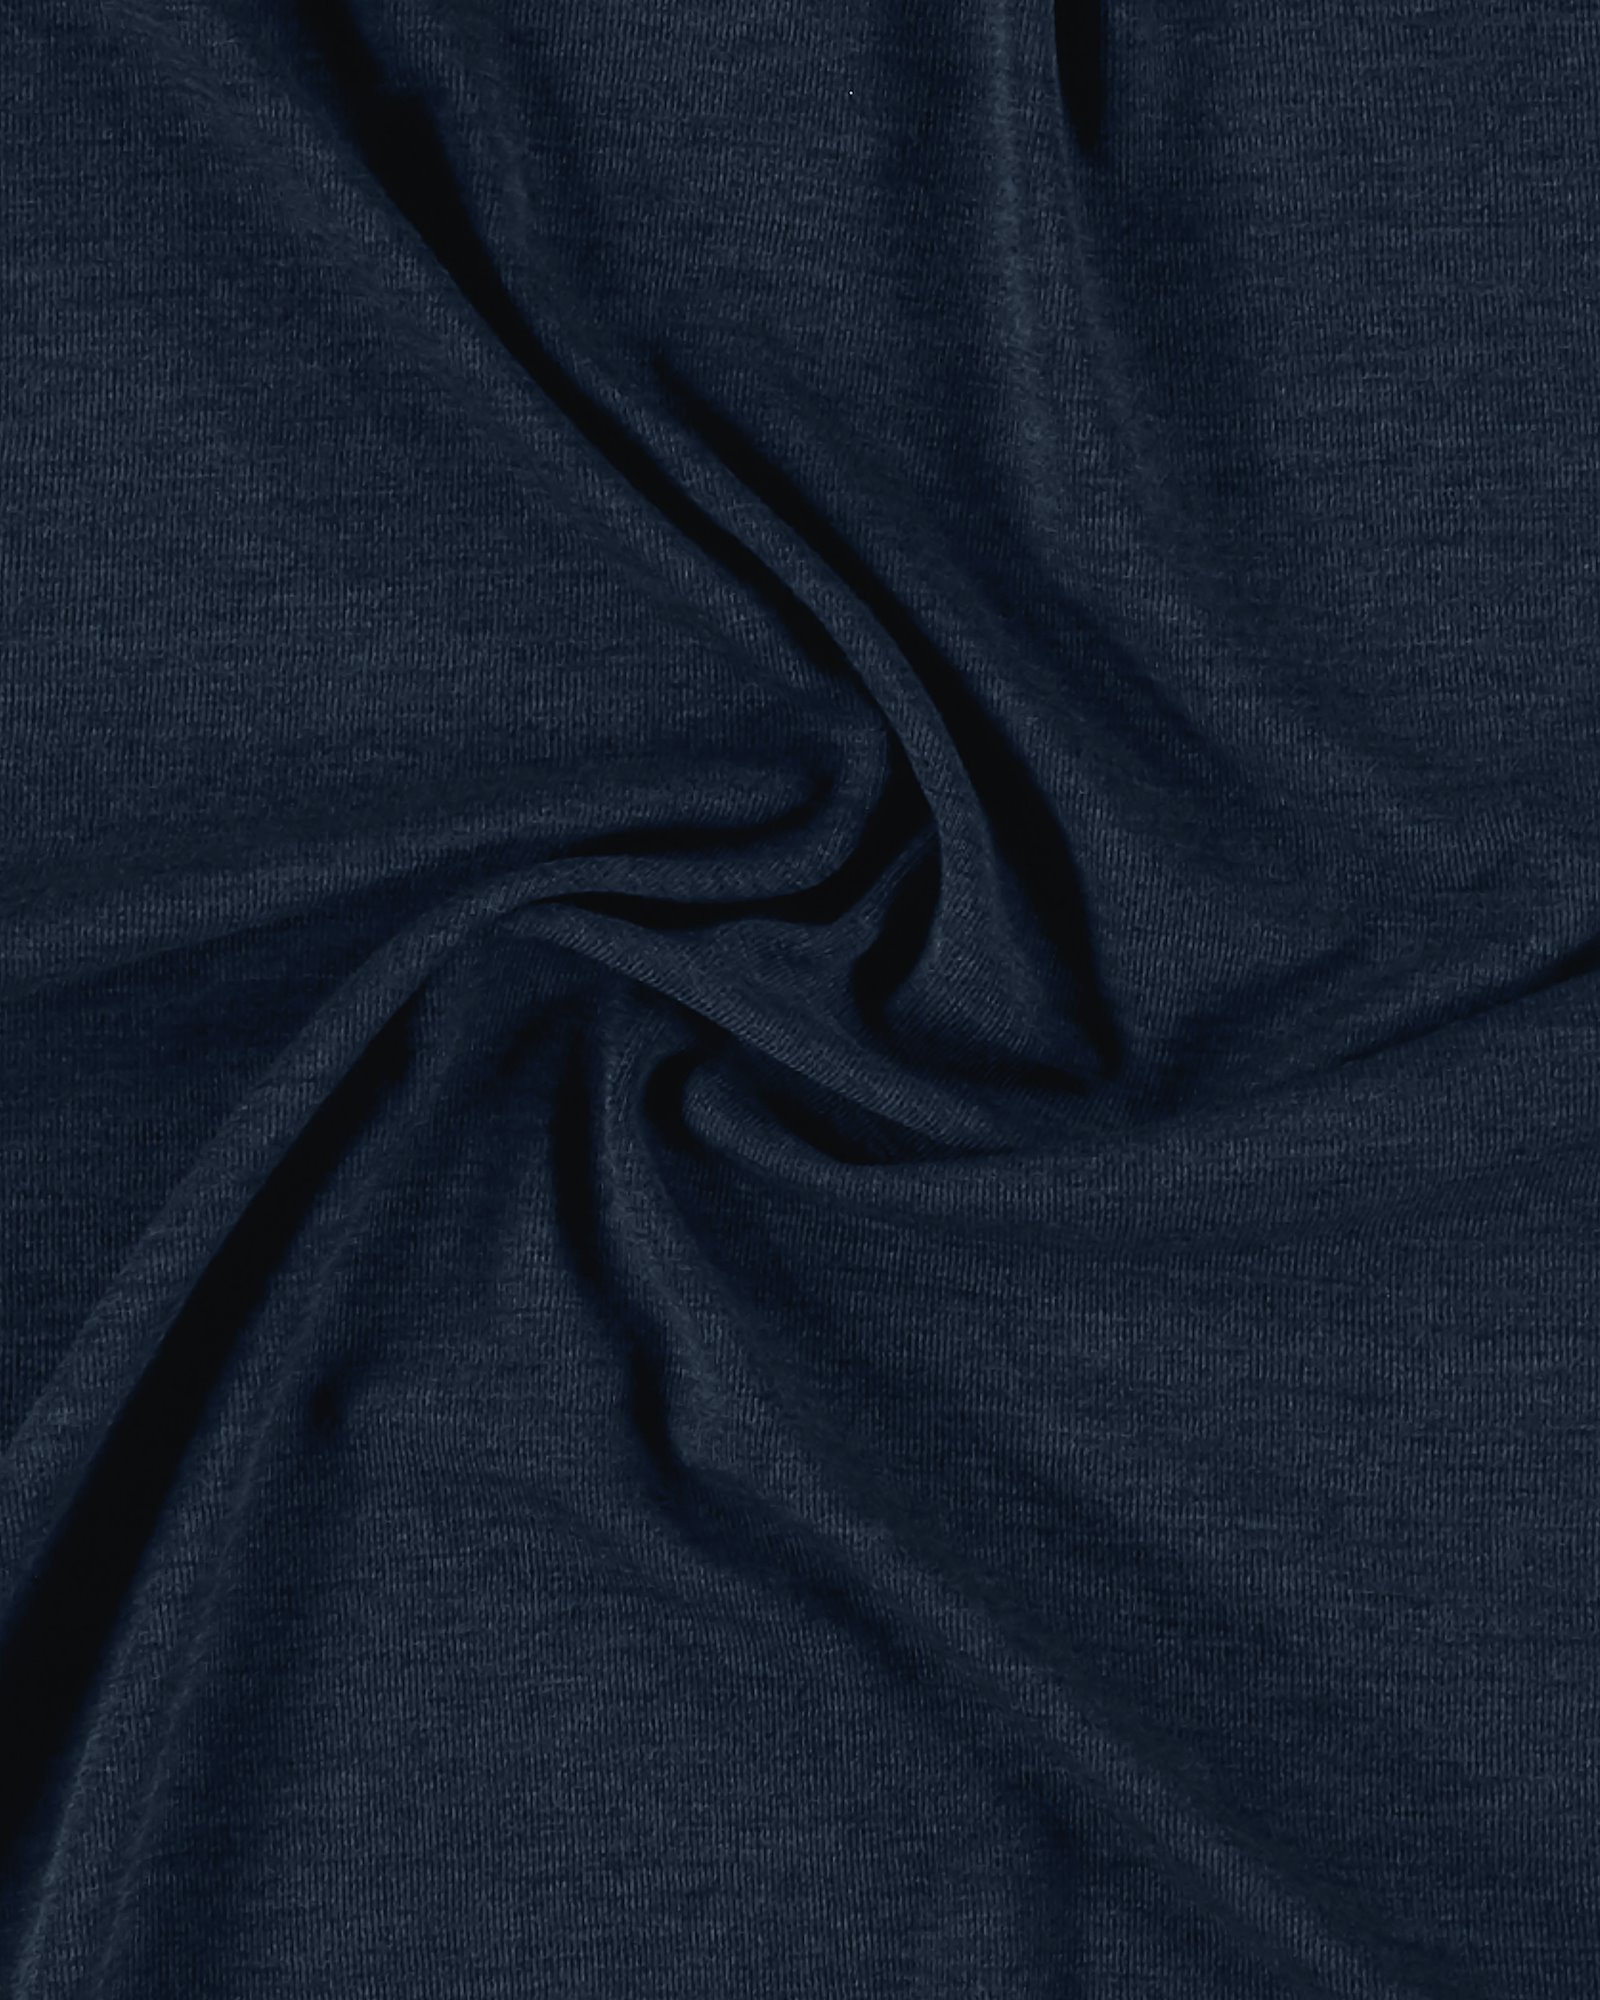 Wool/acrylic jersey dark petrol blue 273539_pack